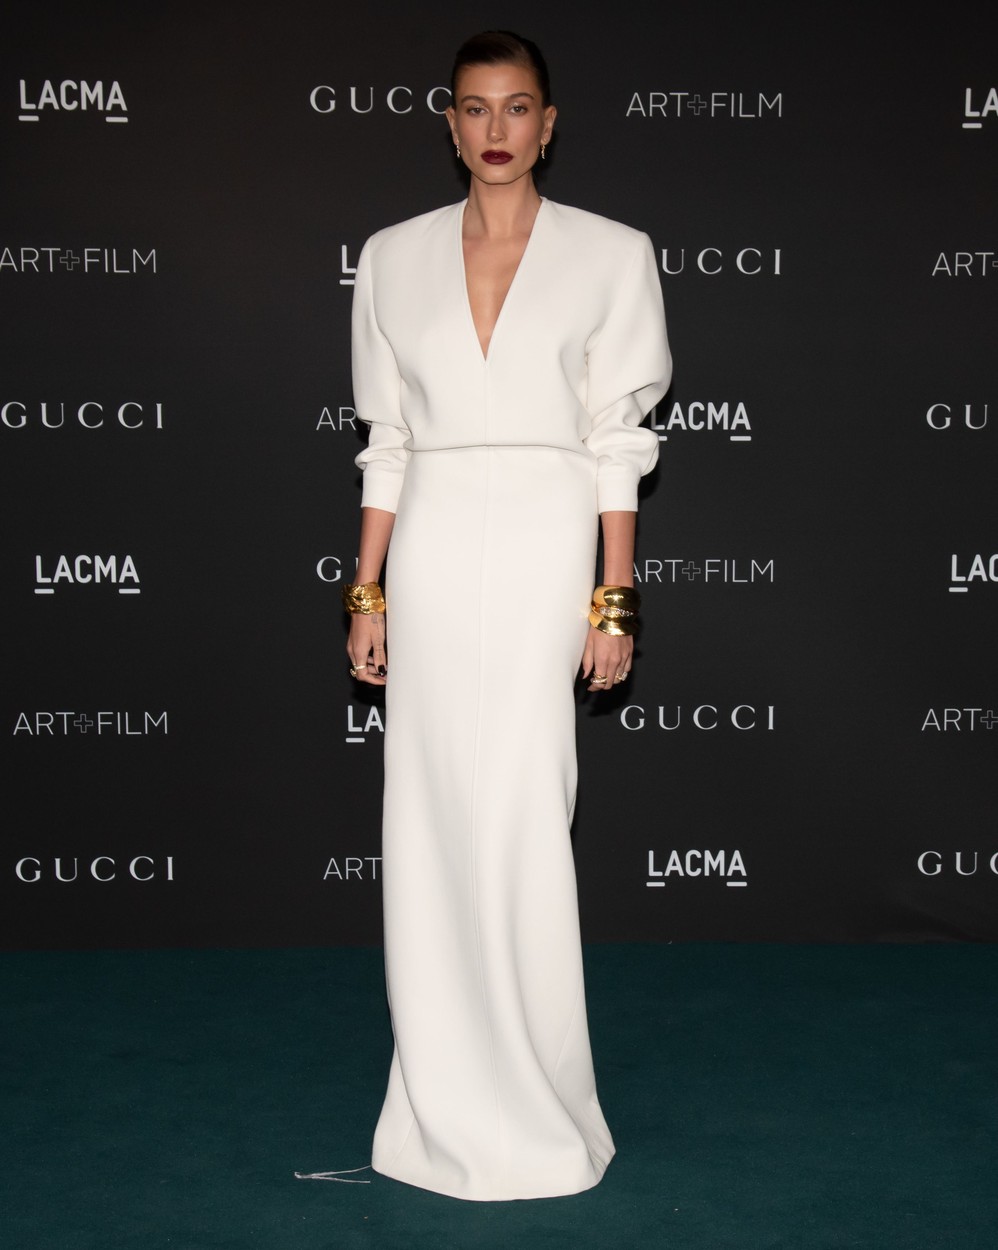 Hailey Bieber a purtat o rochie albă, lungă la LACMA 2021, o creație Yves Saint Laurent